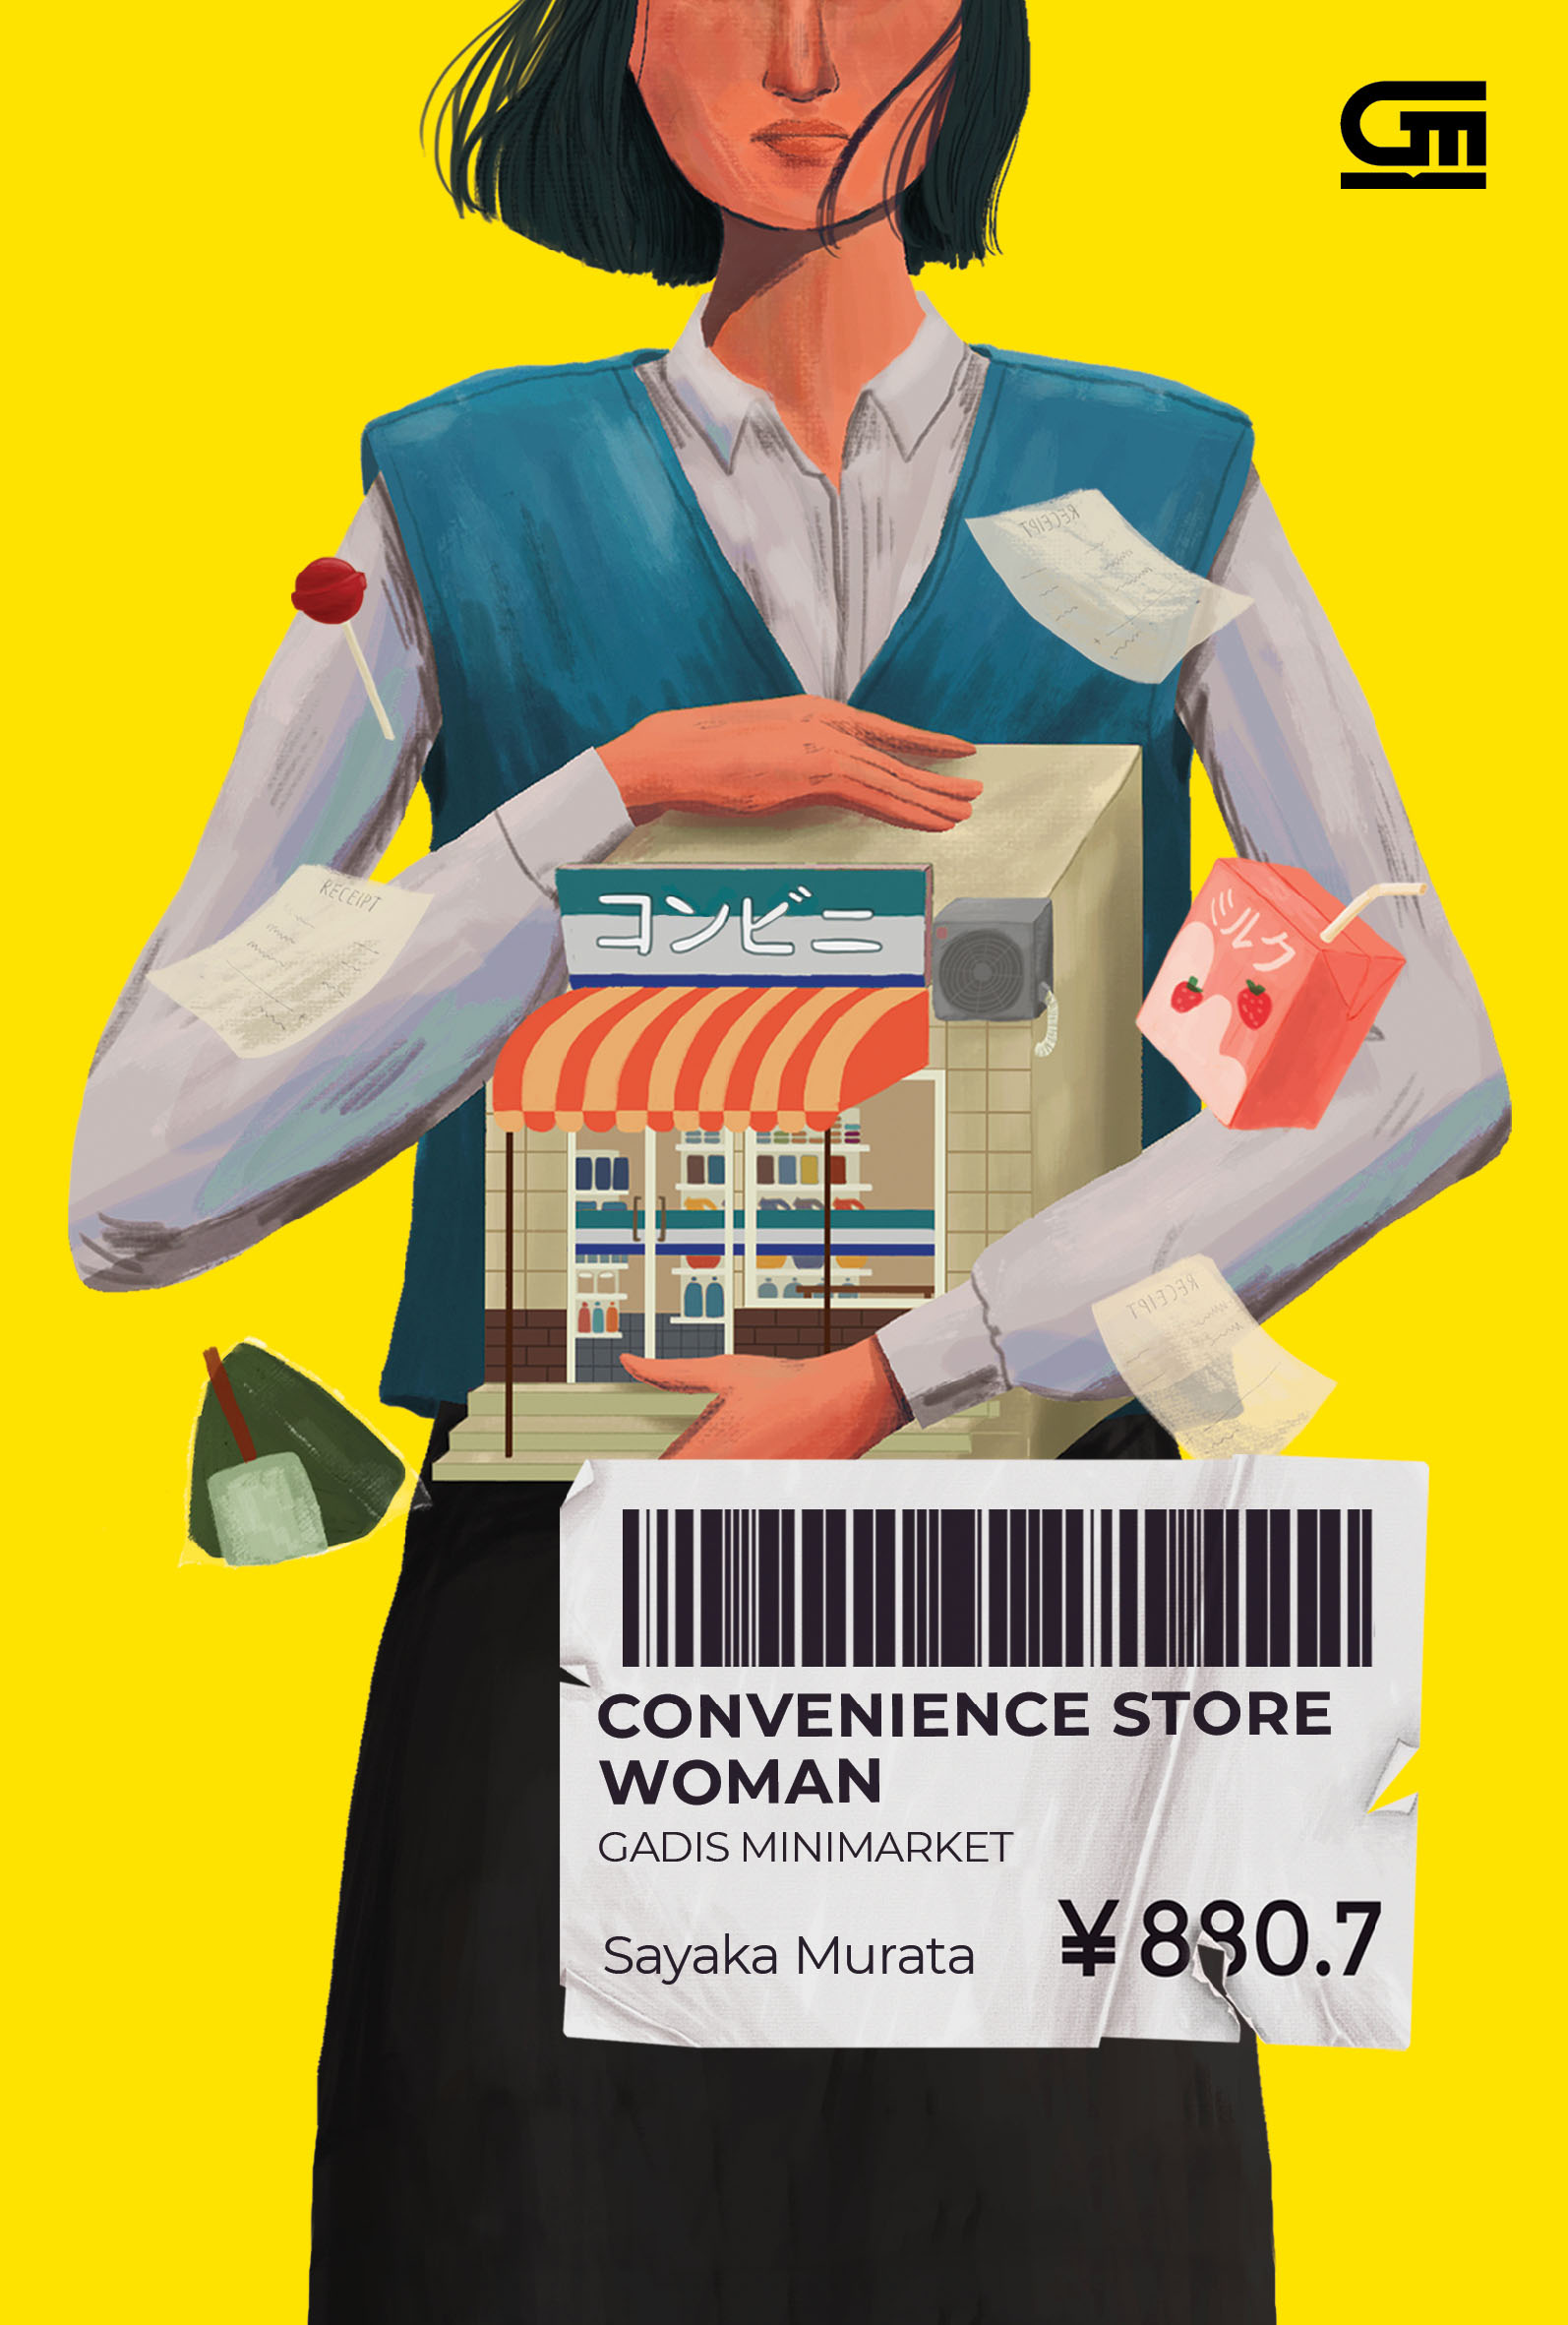 gadis-minimarket-convenience-store-woman